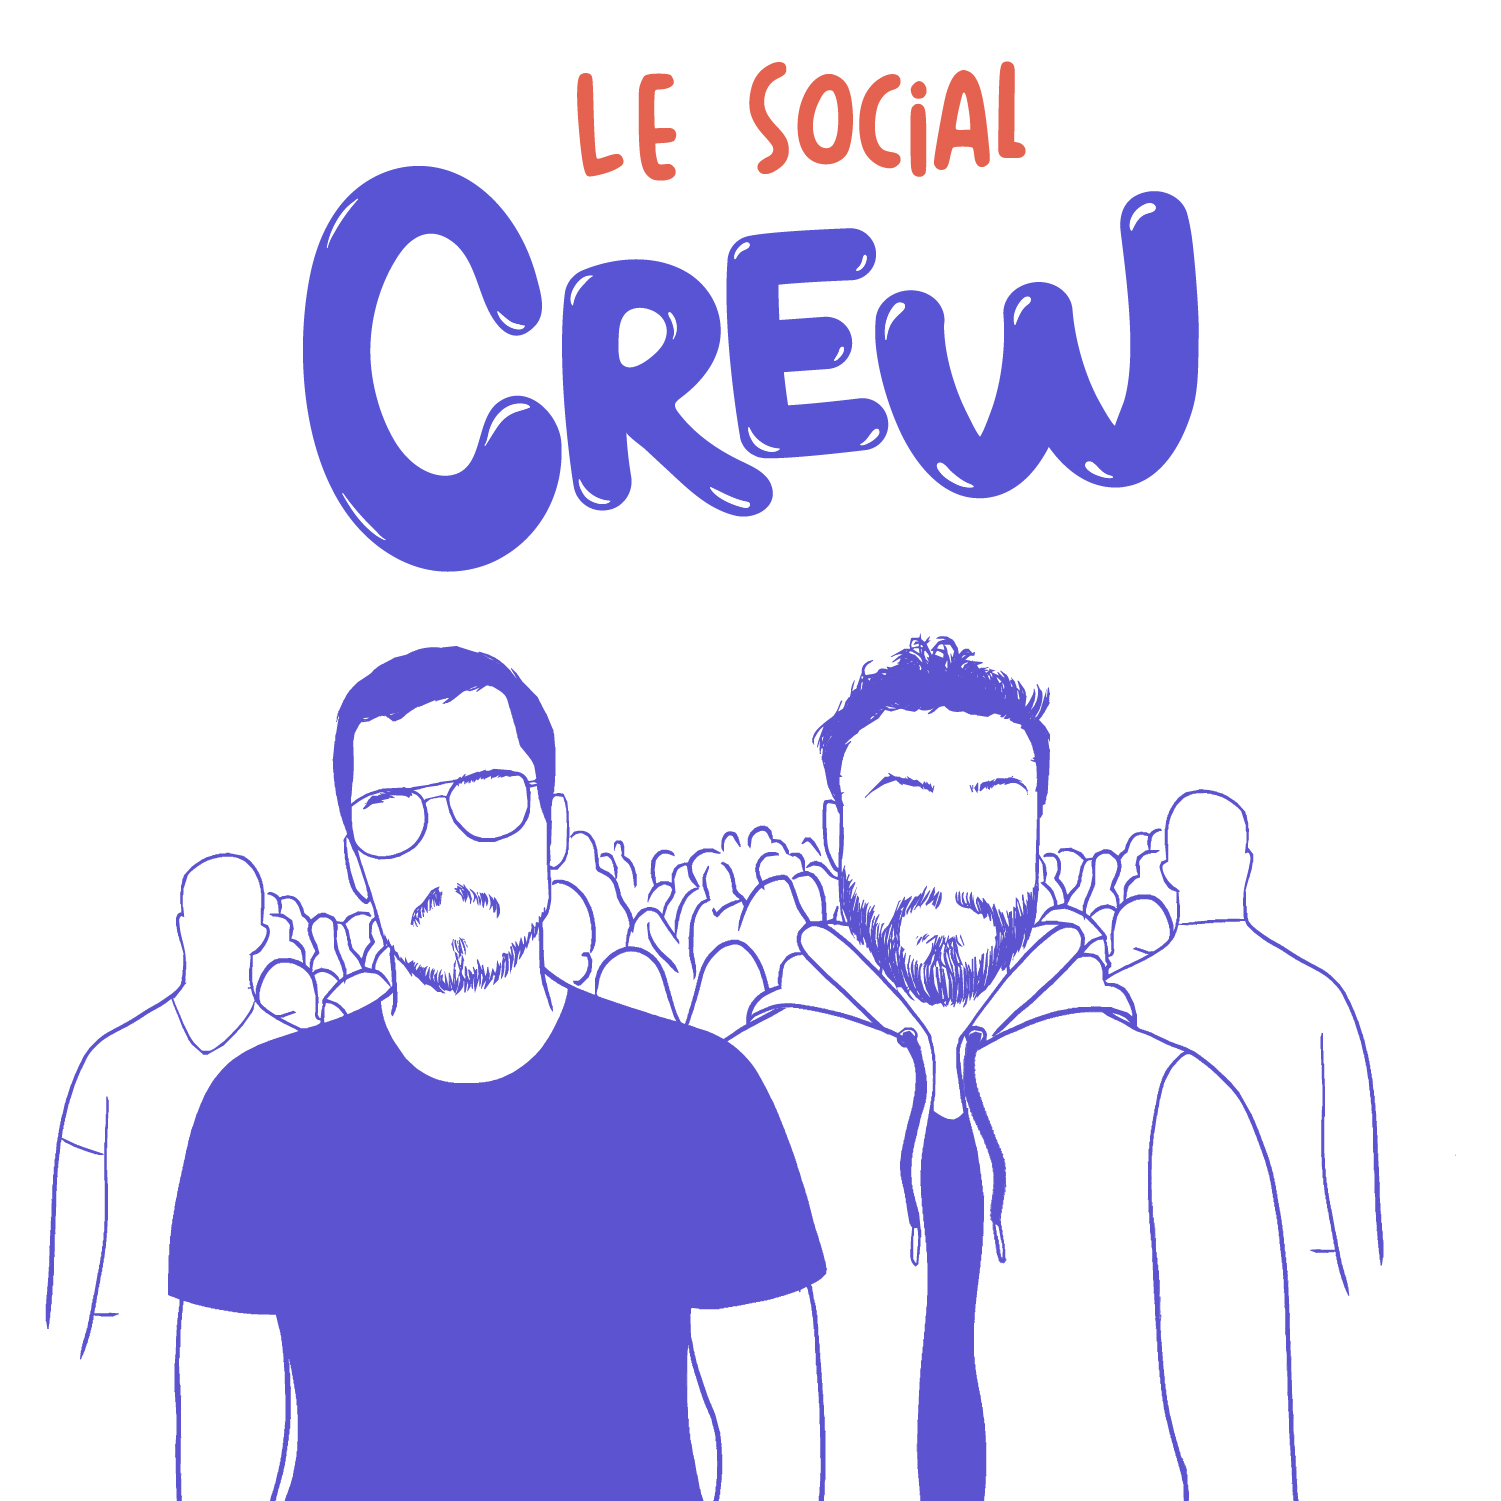 Le Social Crew